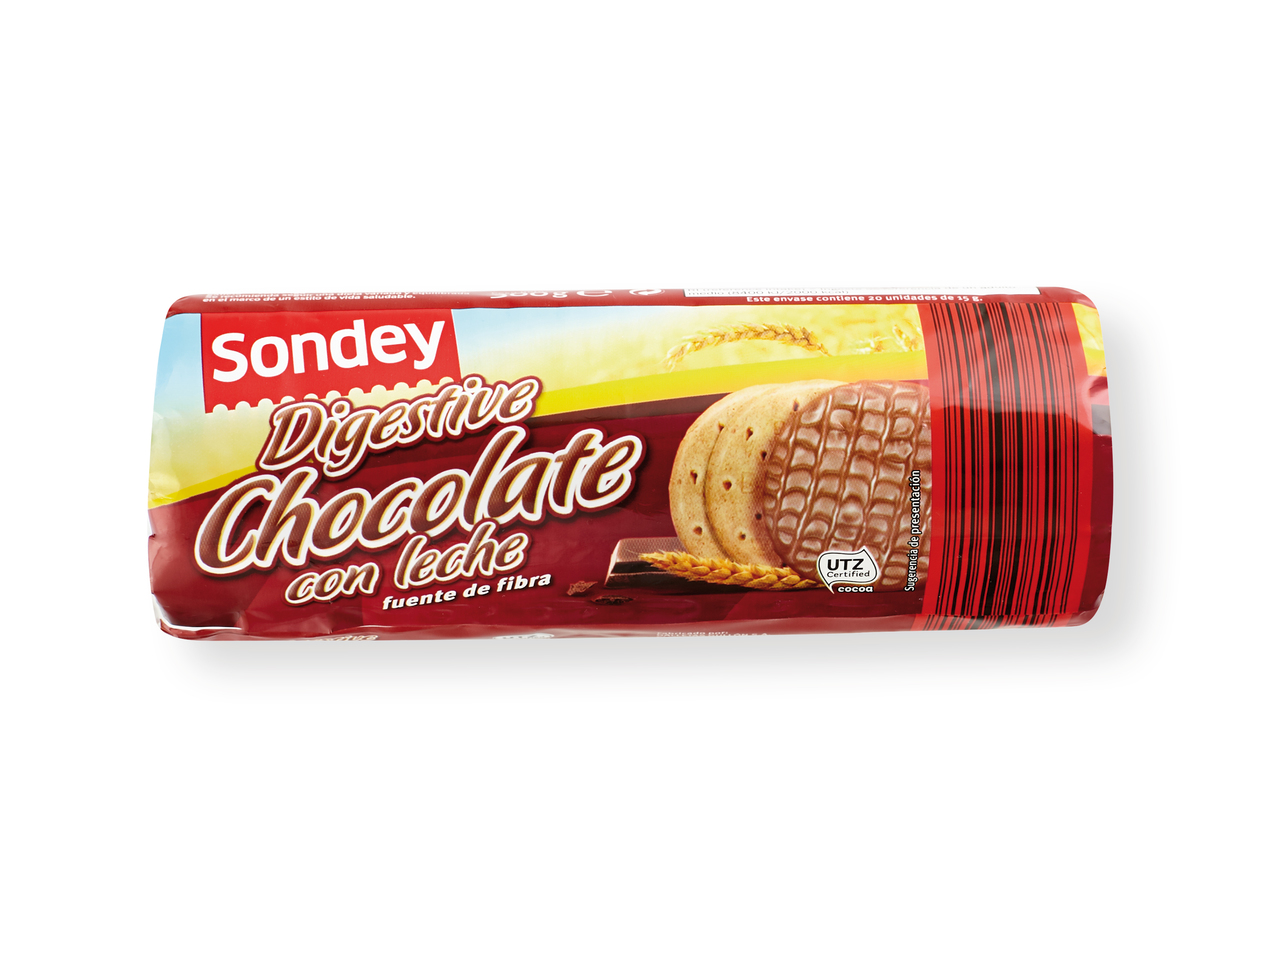 'Sondey(R)' Digestive de chocolate